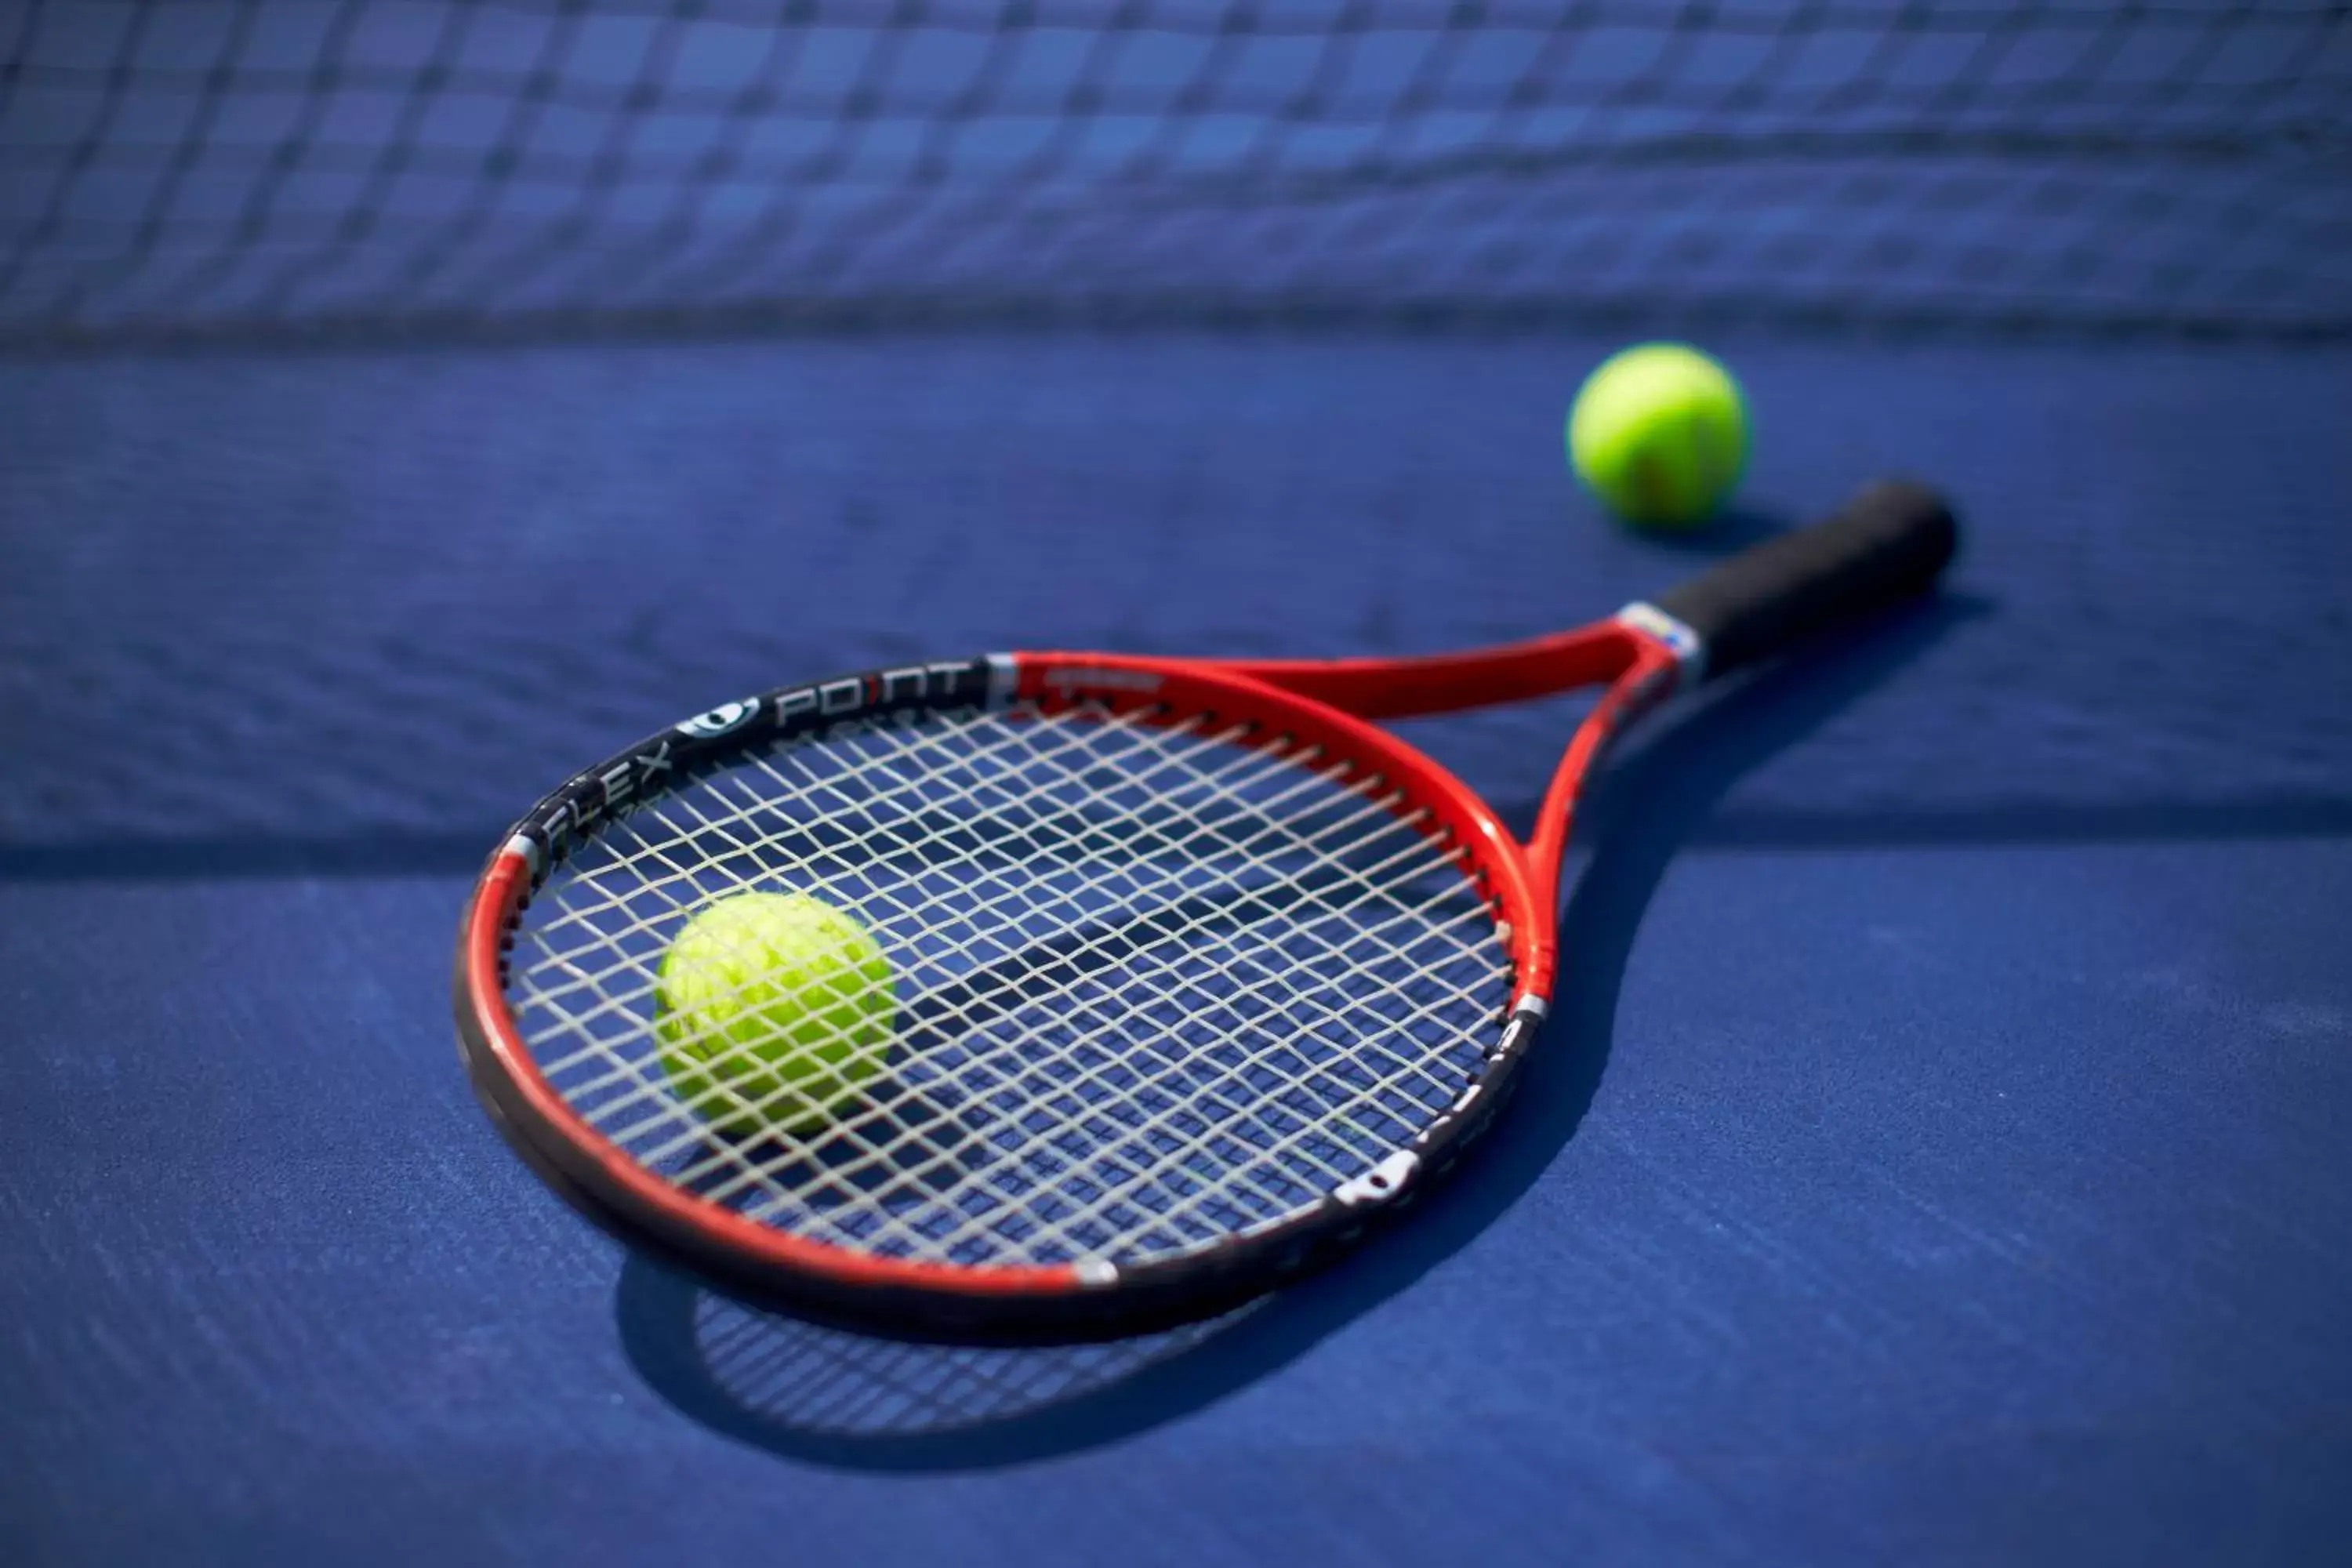 Tennis court, Tennis/Squash in JC KEVIN SATHORN BANGKOK HOTEL (SHA Plus)